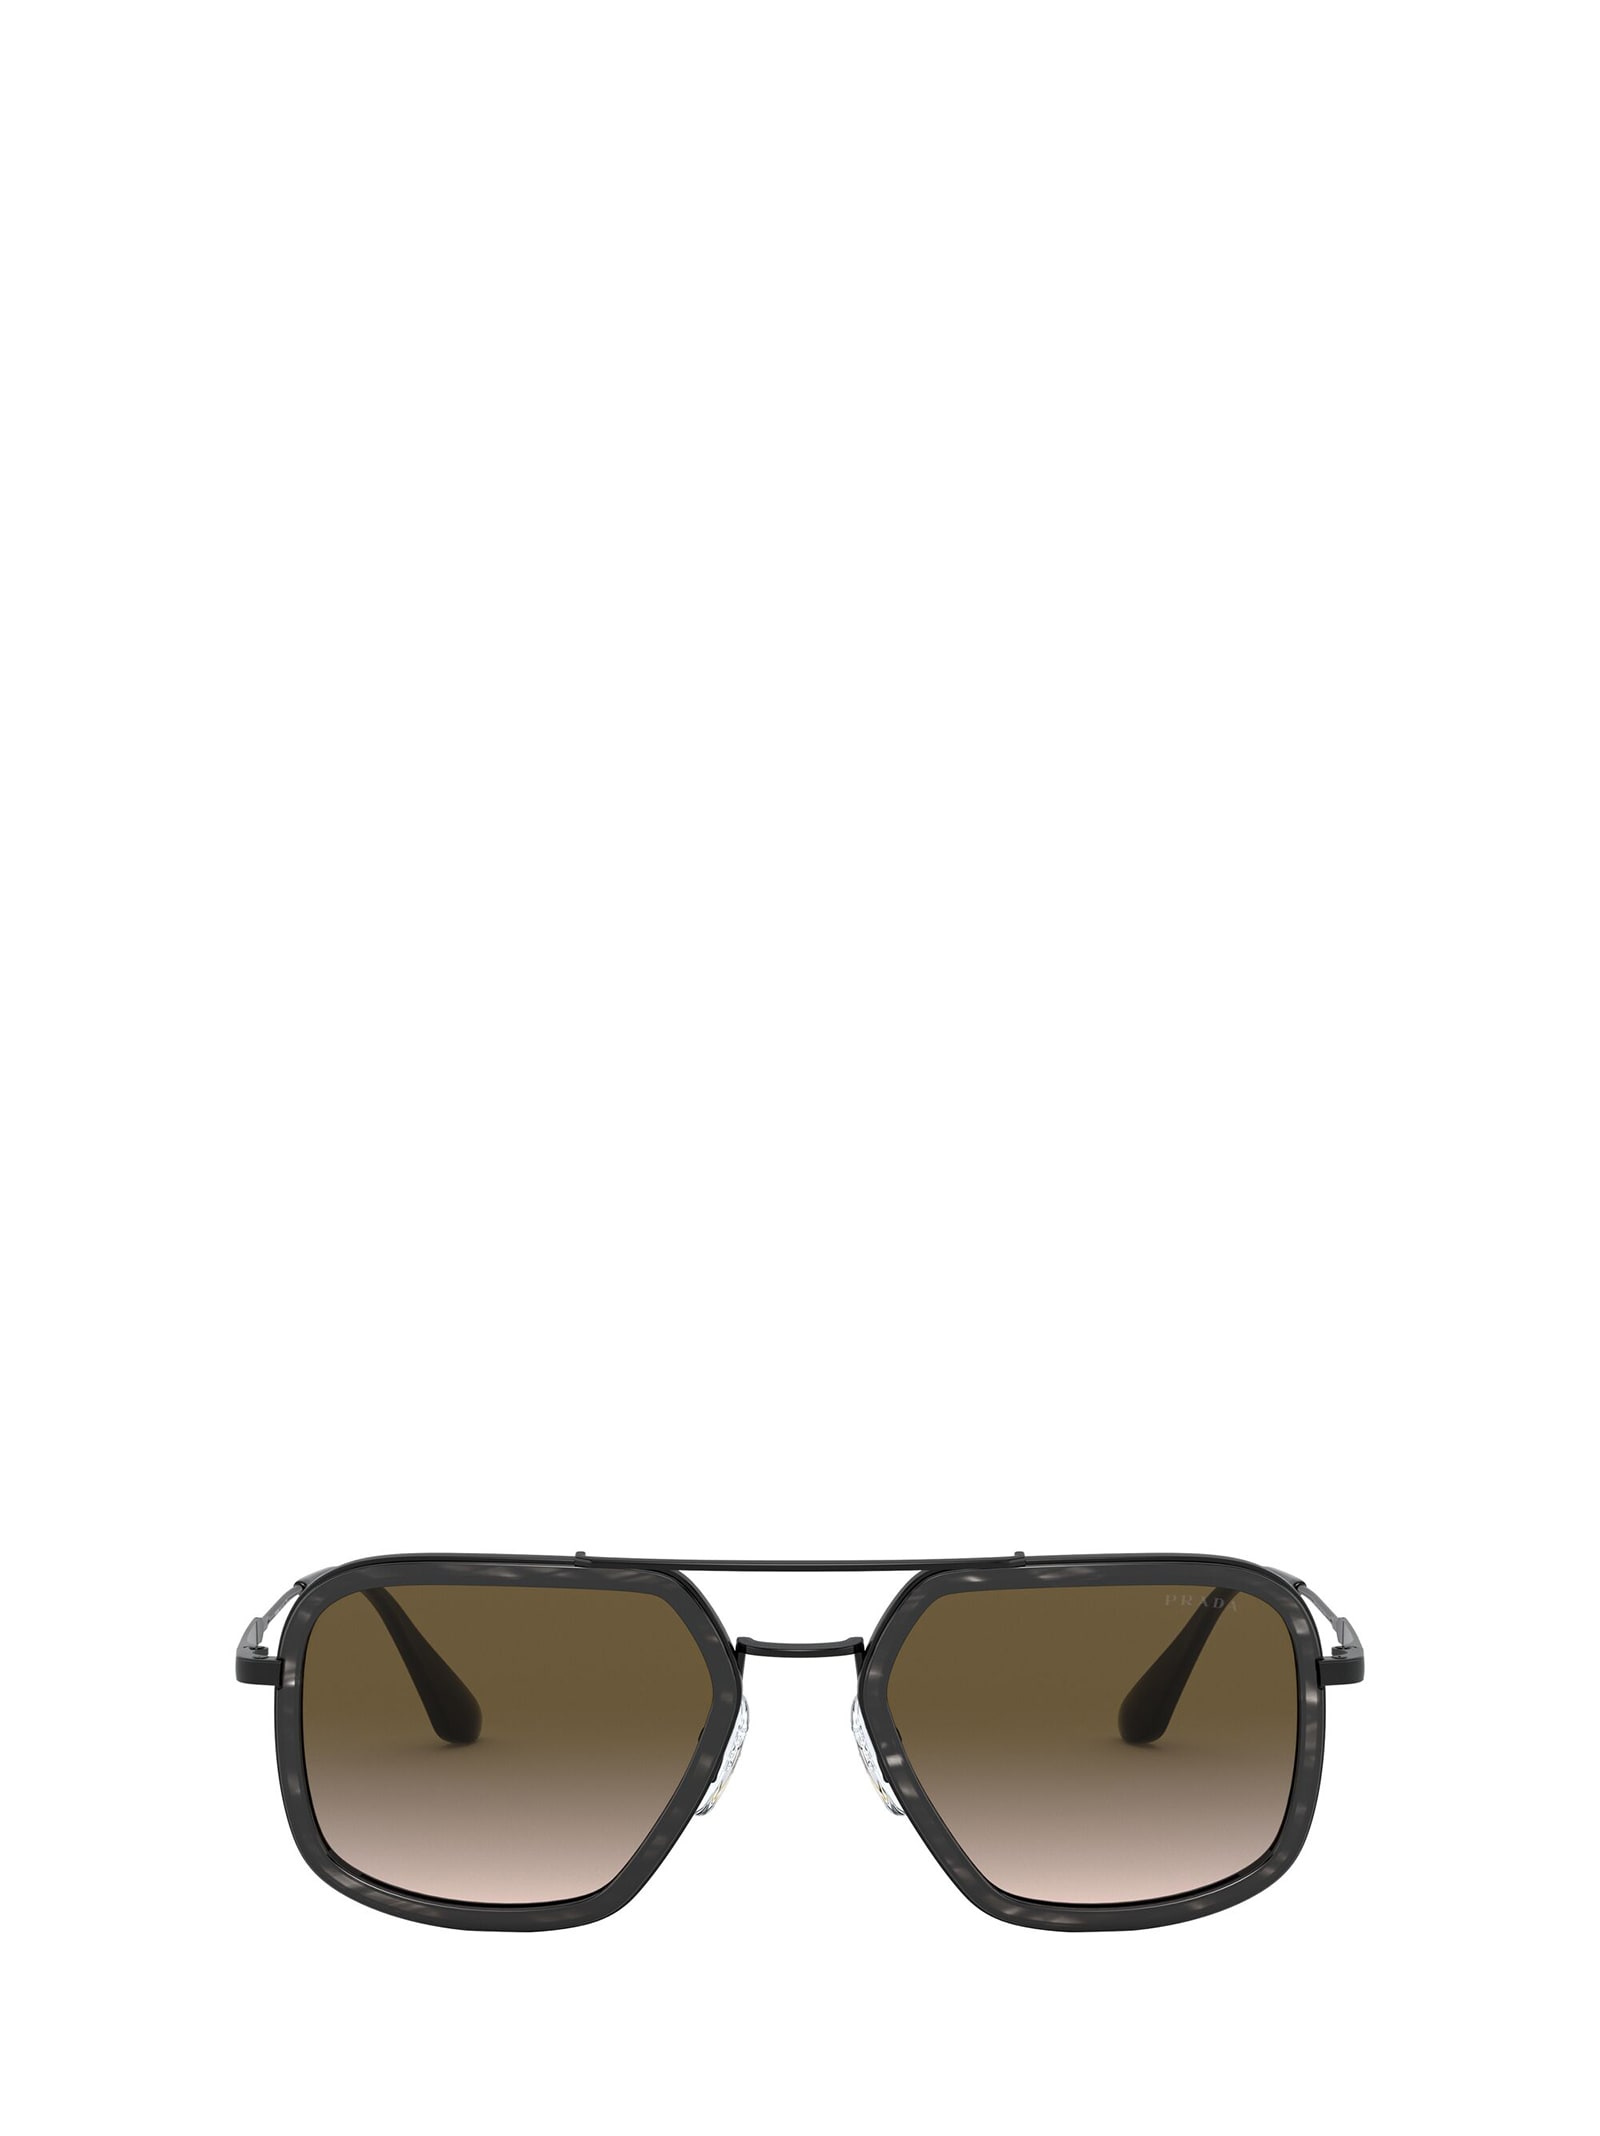 Prada Prada Pr 57xs Stripped Grey / Black Sunglasses